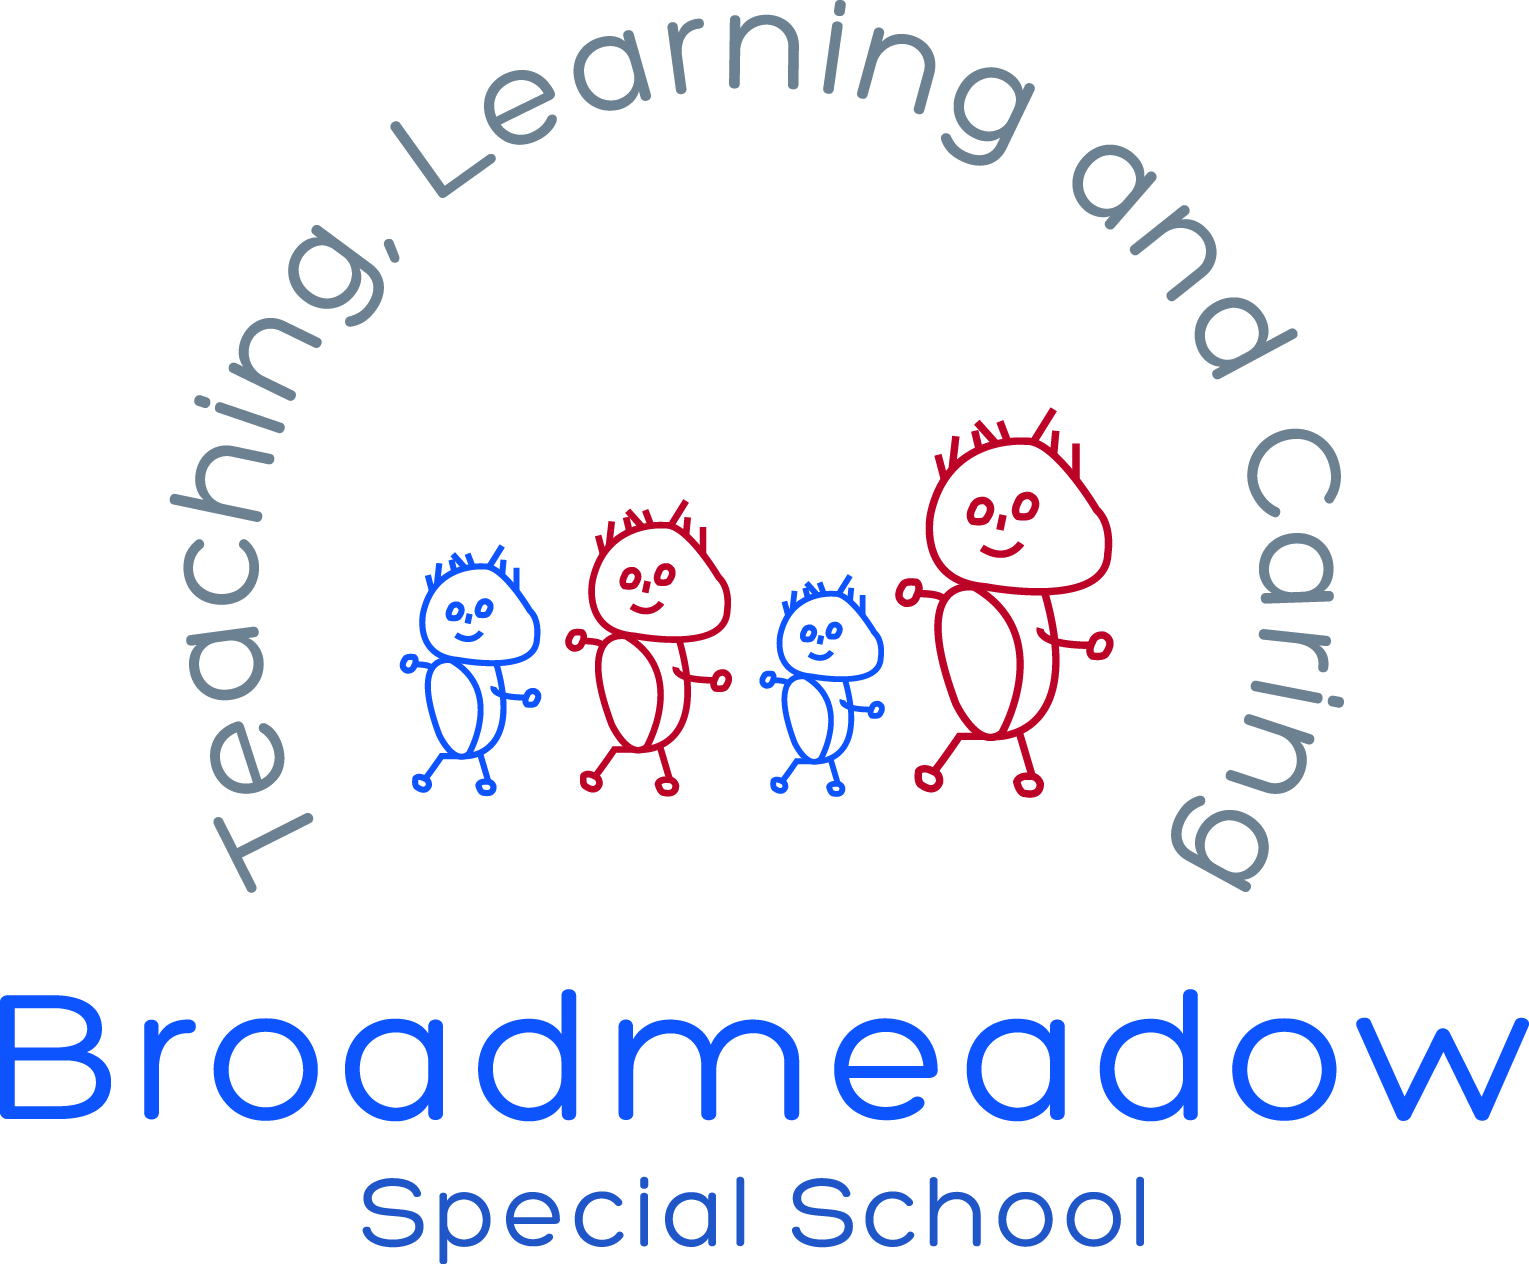 Broadmeadow Special School